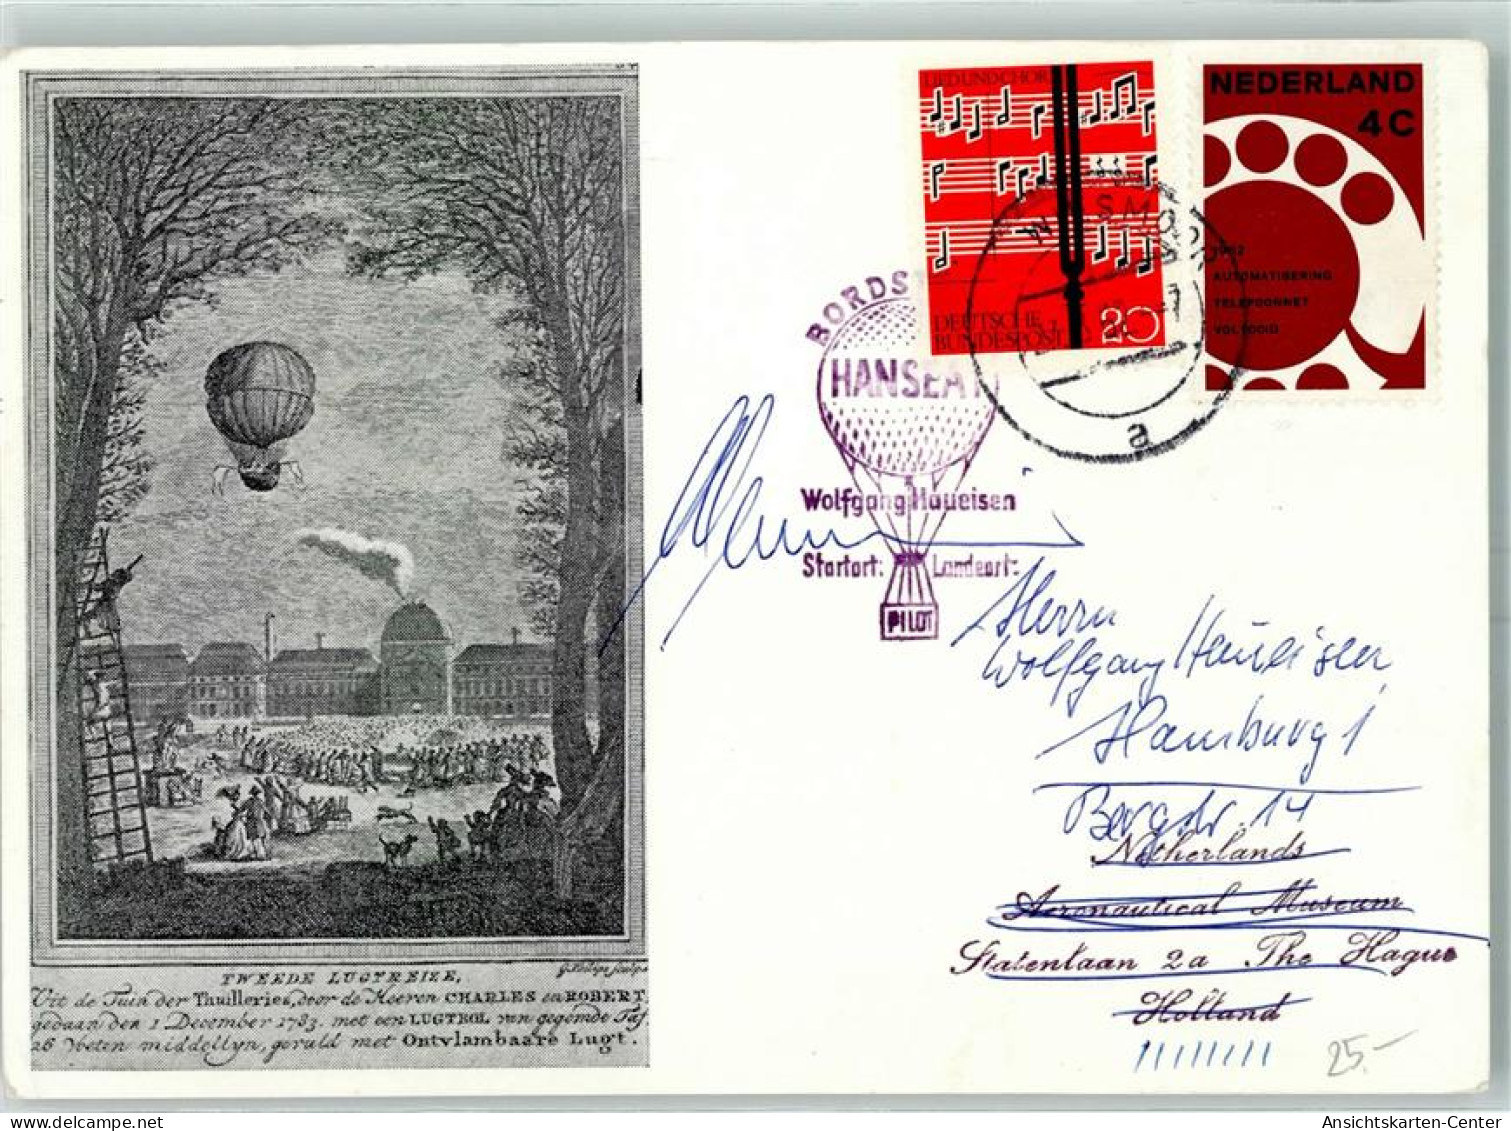 13164911 - Bordstempel Hanseat Wolfgang Haueisen - Balloons